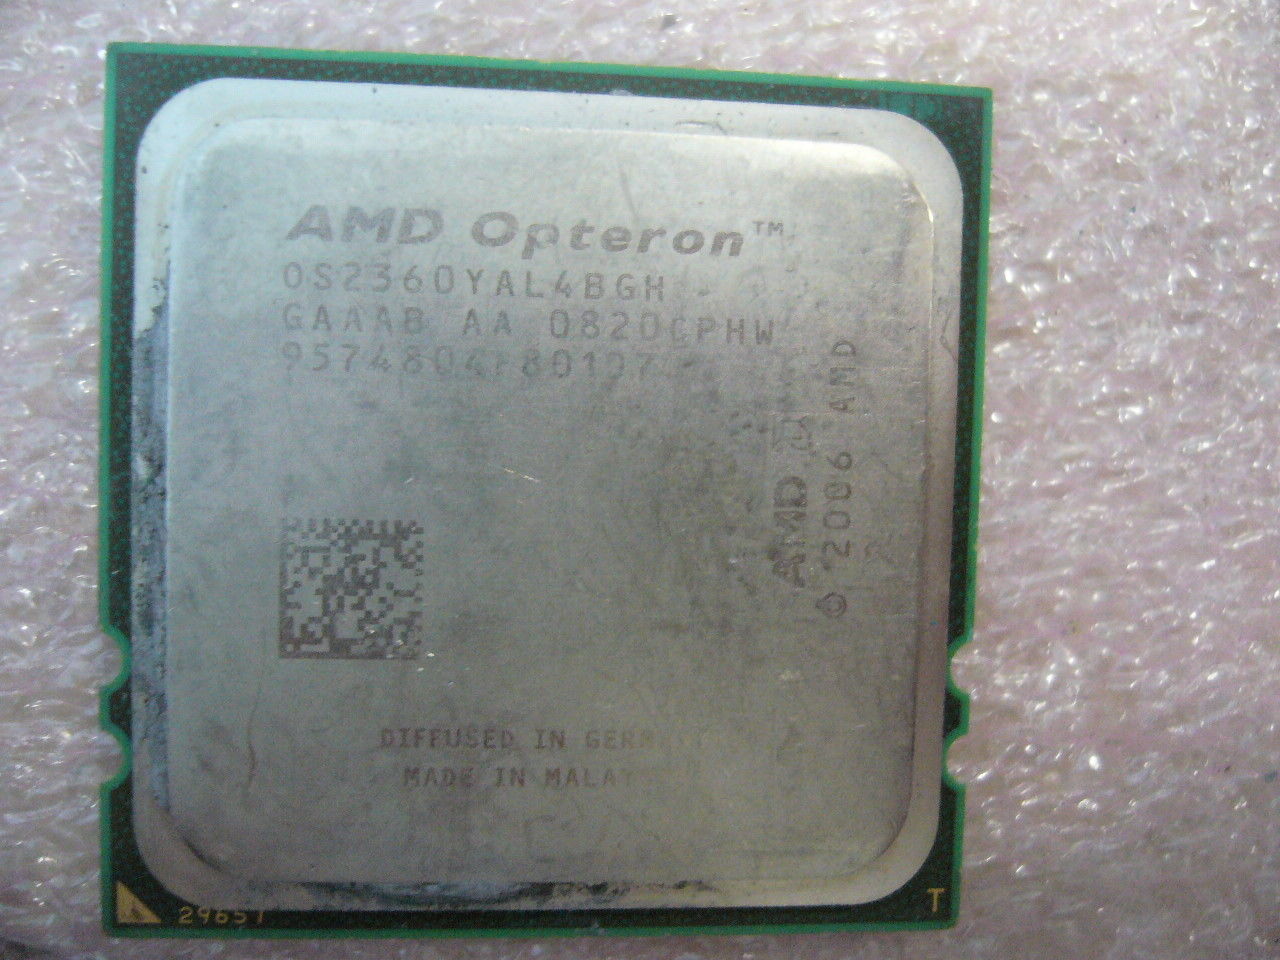 QTY 1x AMD Opteron 2360 SE 2.5 GHz Quad-Core (OS2360YAL4BGH) CPU Socket F 1207